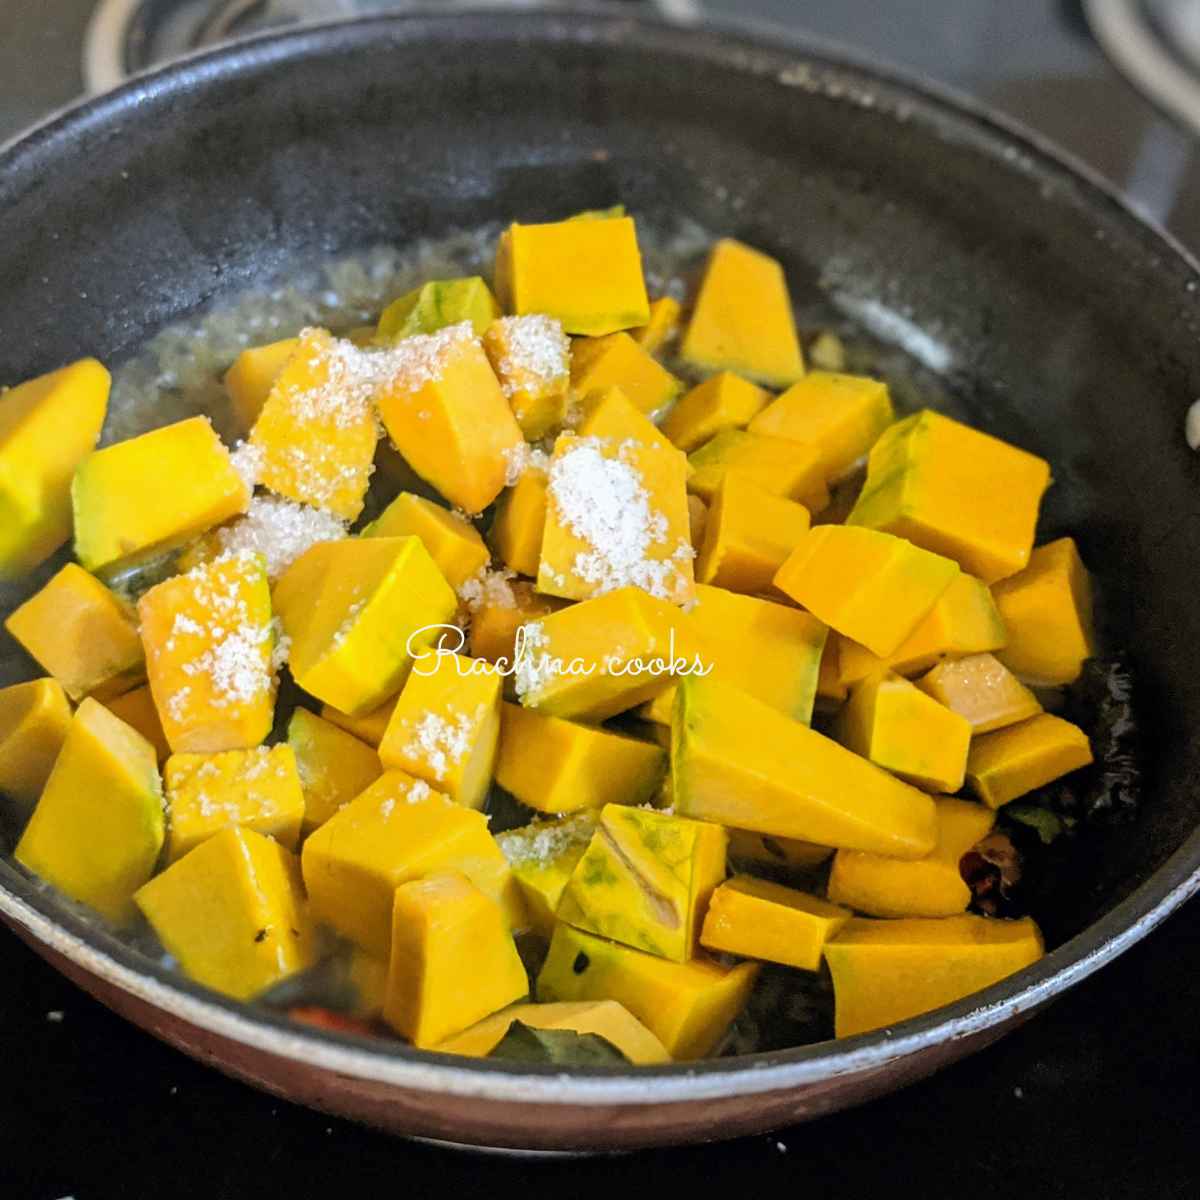 Cubed pumpkin pieces with salt in a wok